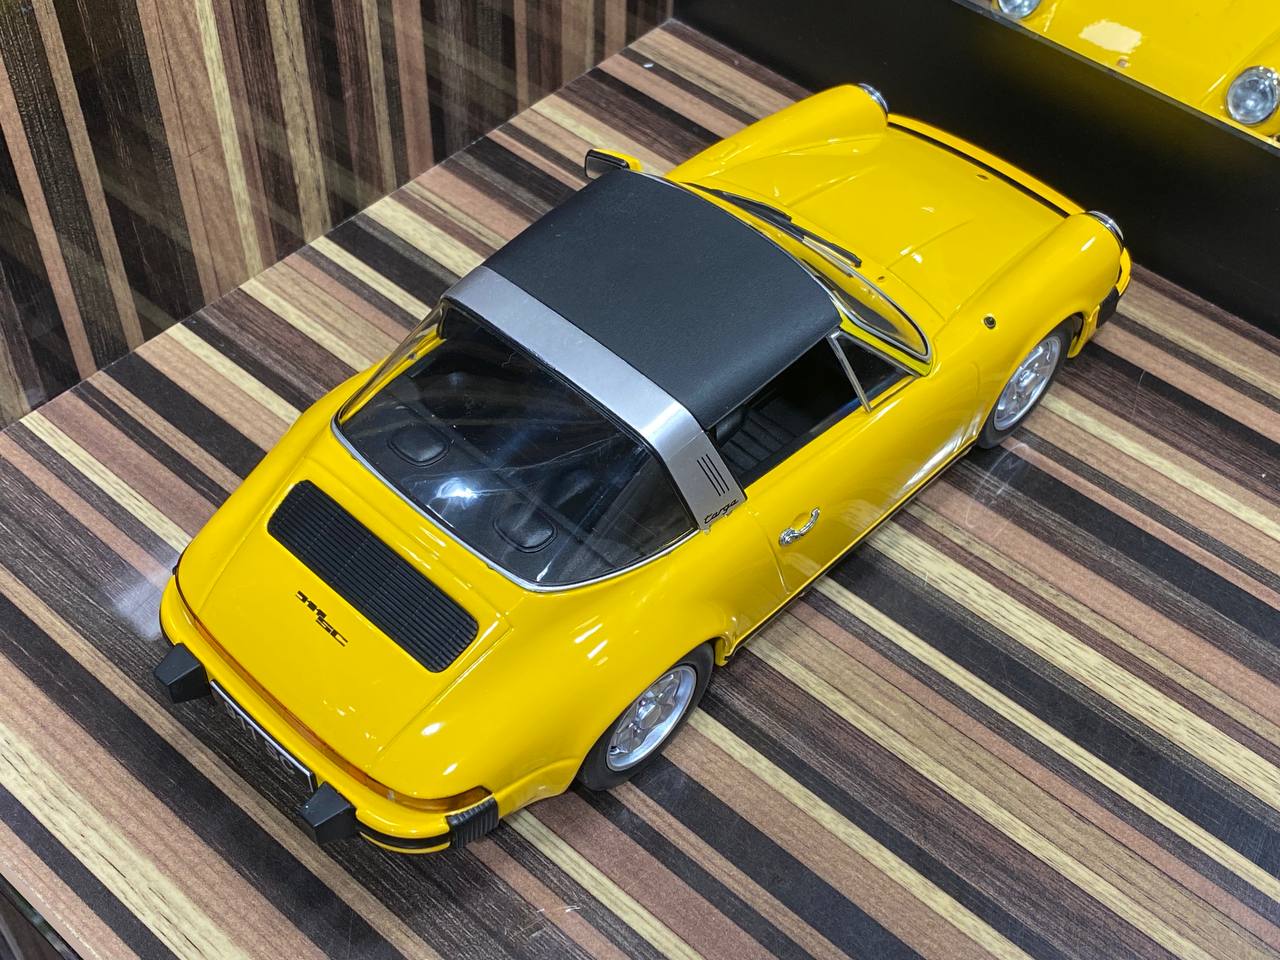 1/18 Porsche 911 SC Targa 1978 Yellow - KK Models|Sold in Dturman.com Dubai UAE.